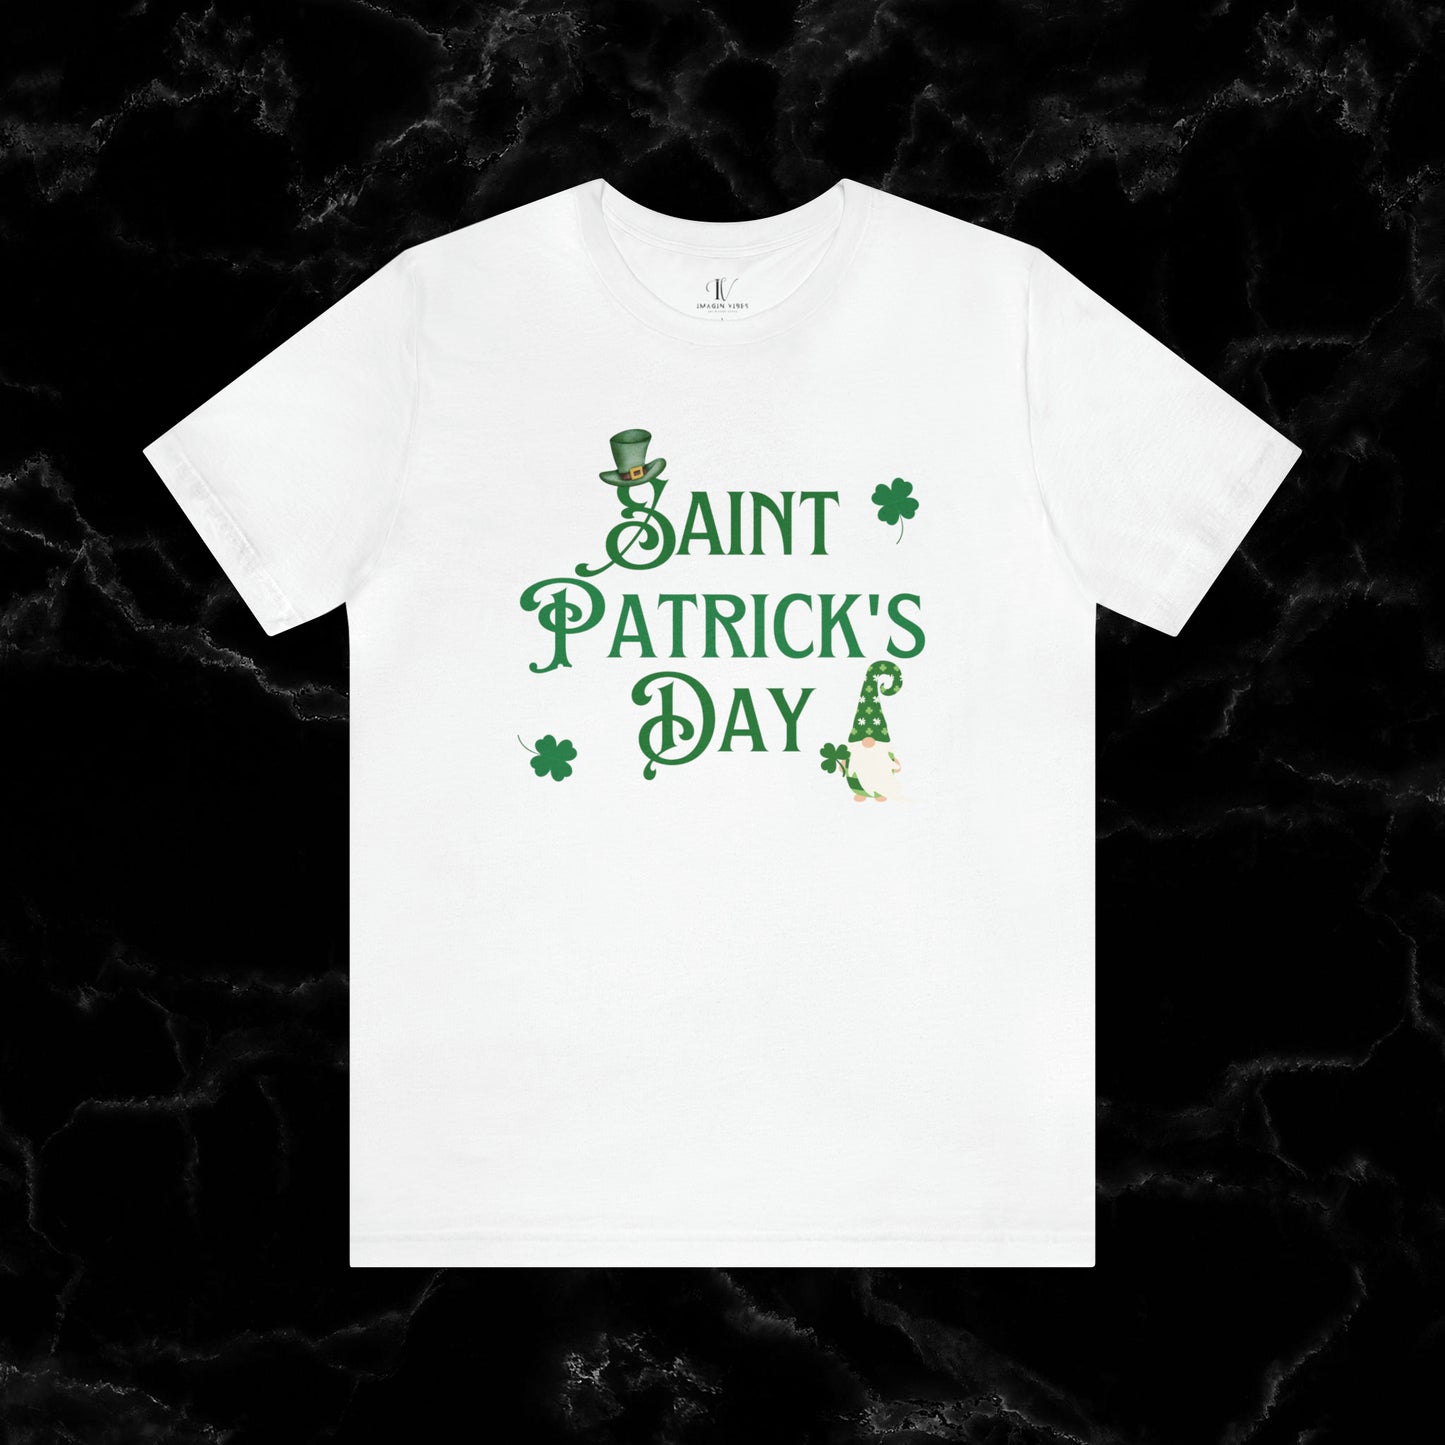 Saint Patrick's Day Shirt - St. Paddy's Day Lucky Irish Shamrock Leaf Clover Flag Beer T-Shirt T-Shirt White XS 